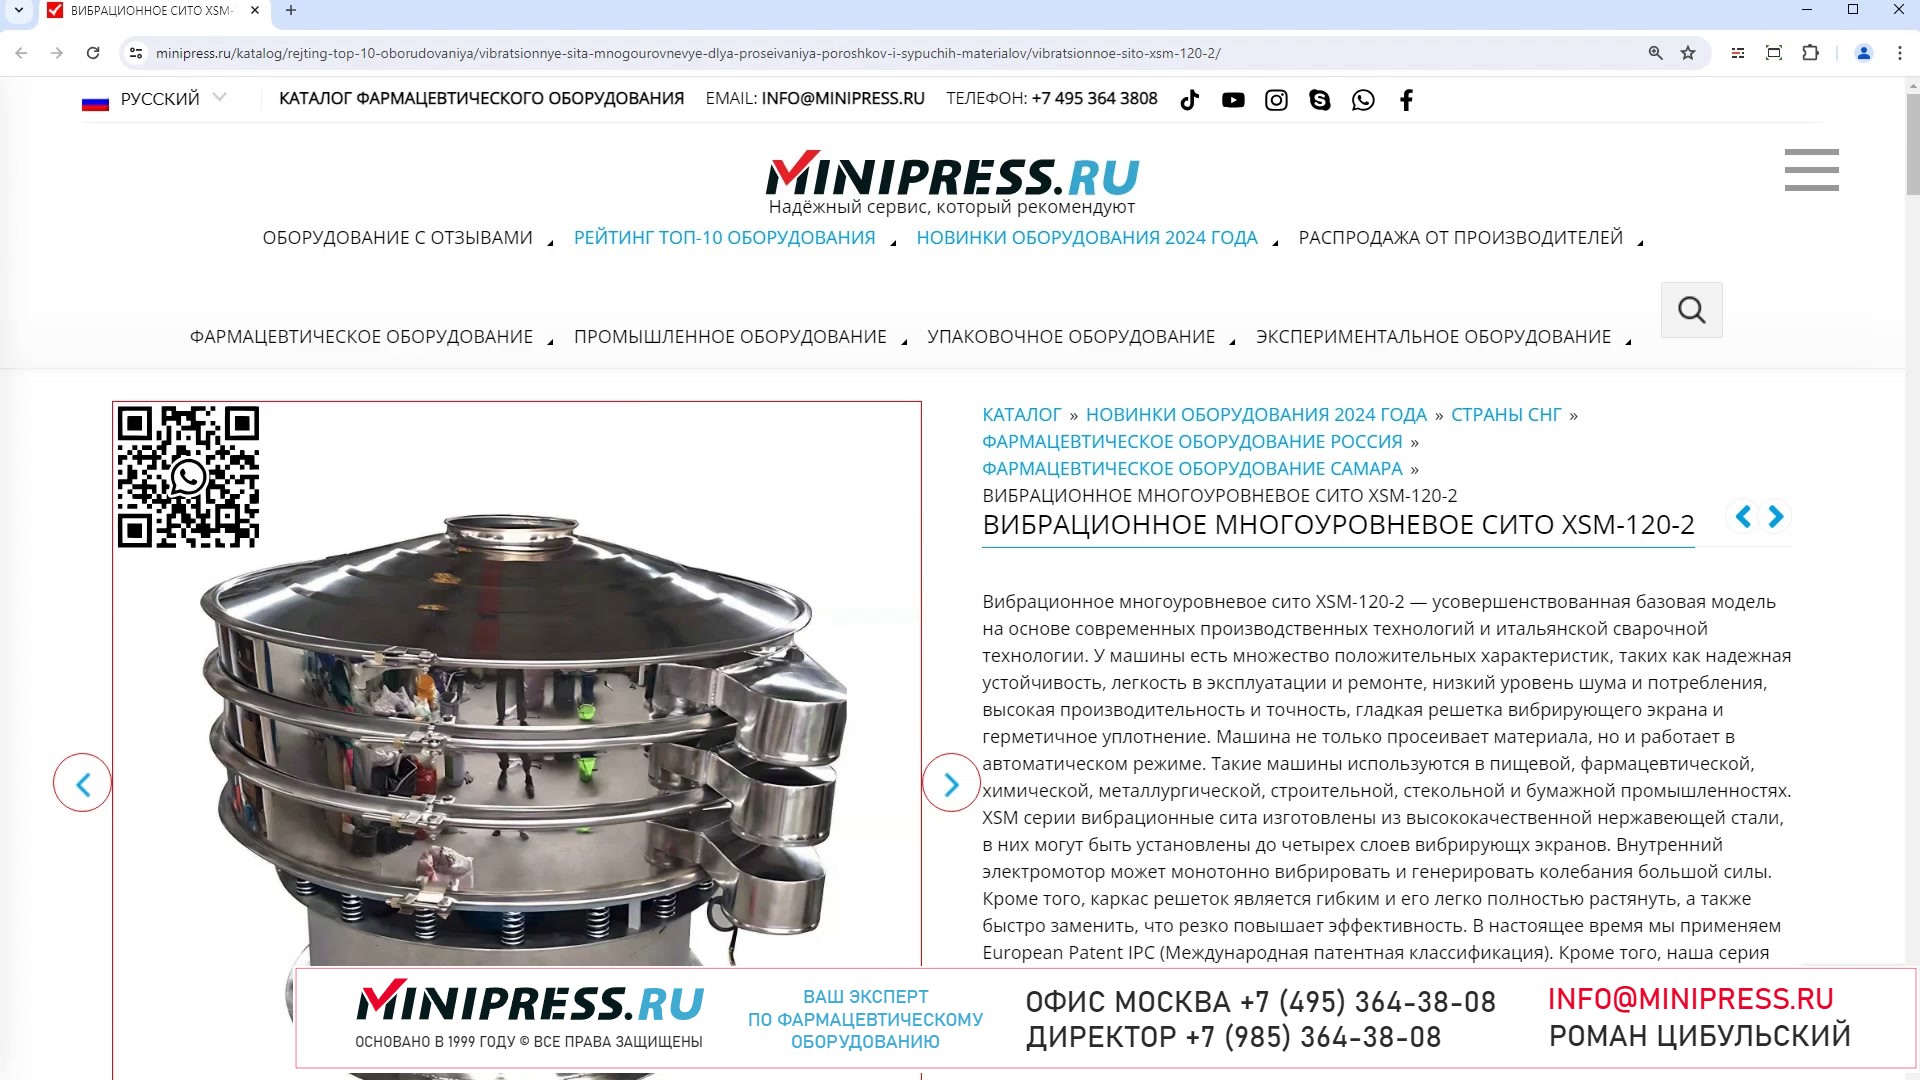 Minipress.ru Вибрационное многоуровневое сито XSM-120-2